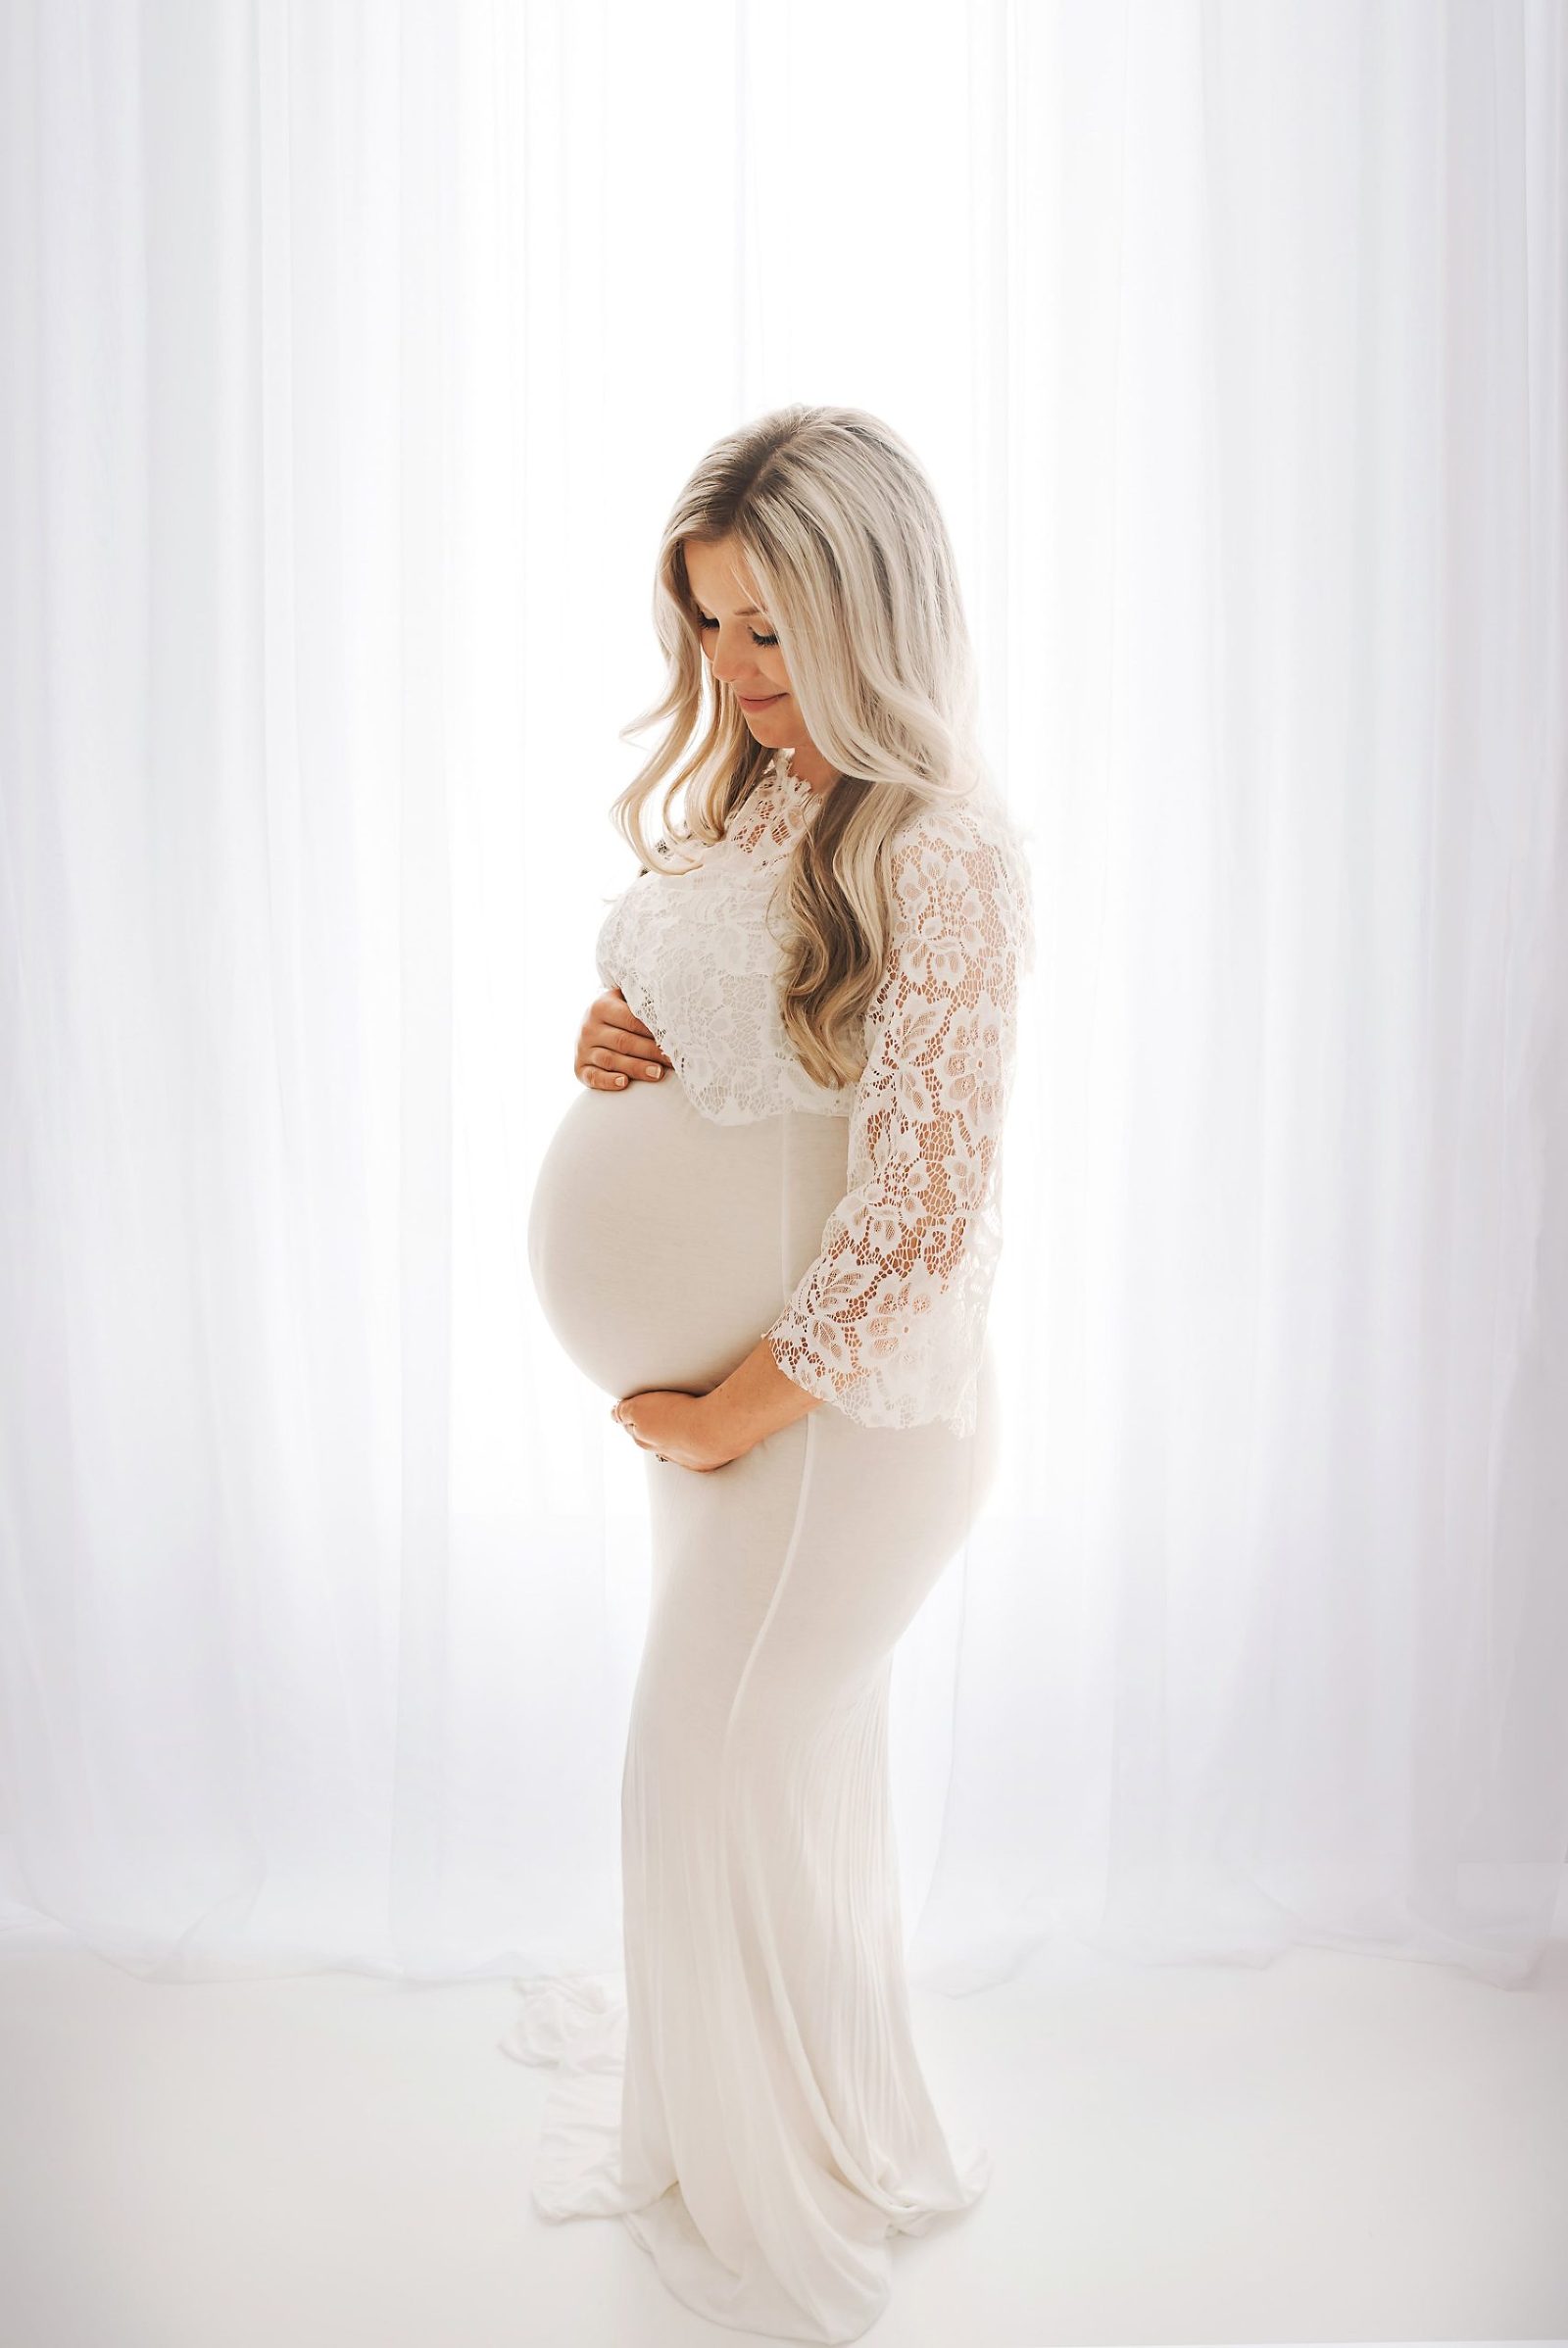 in-studio maternity photoshoot white dress